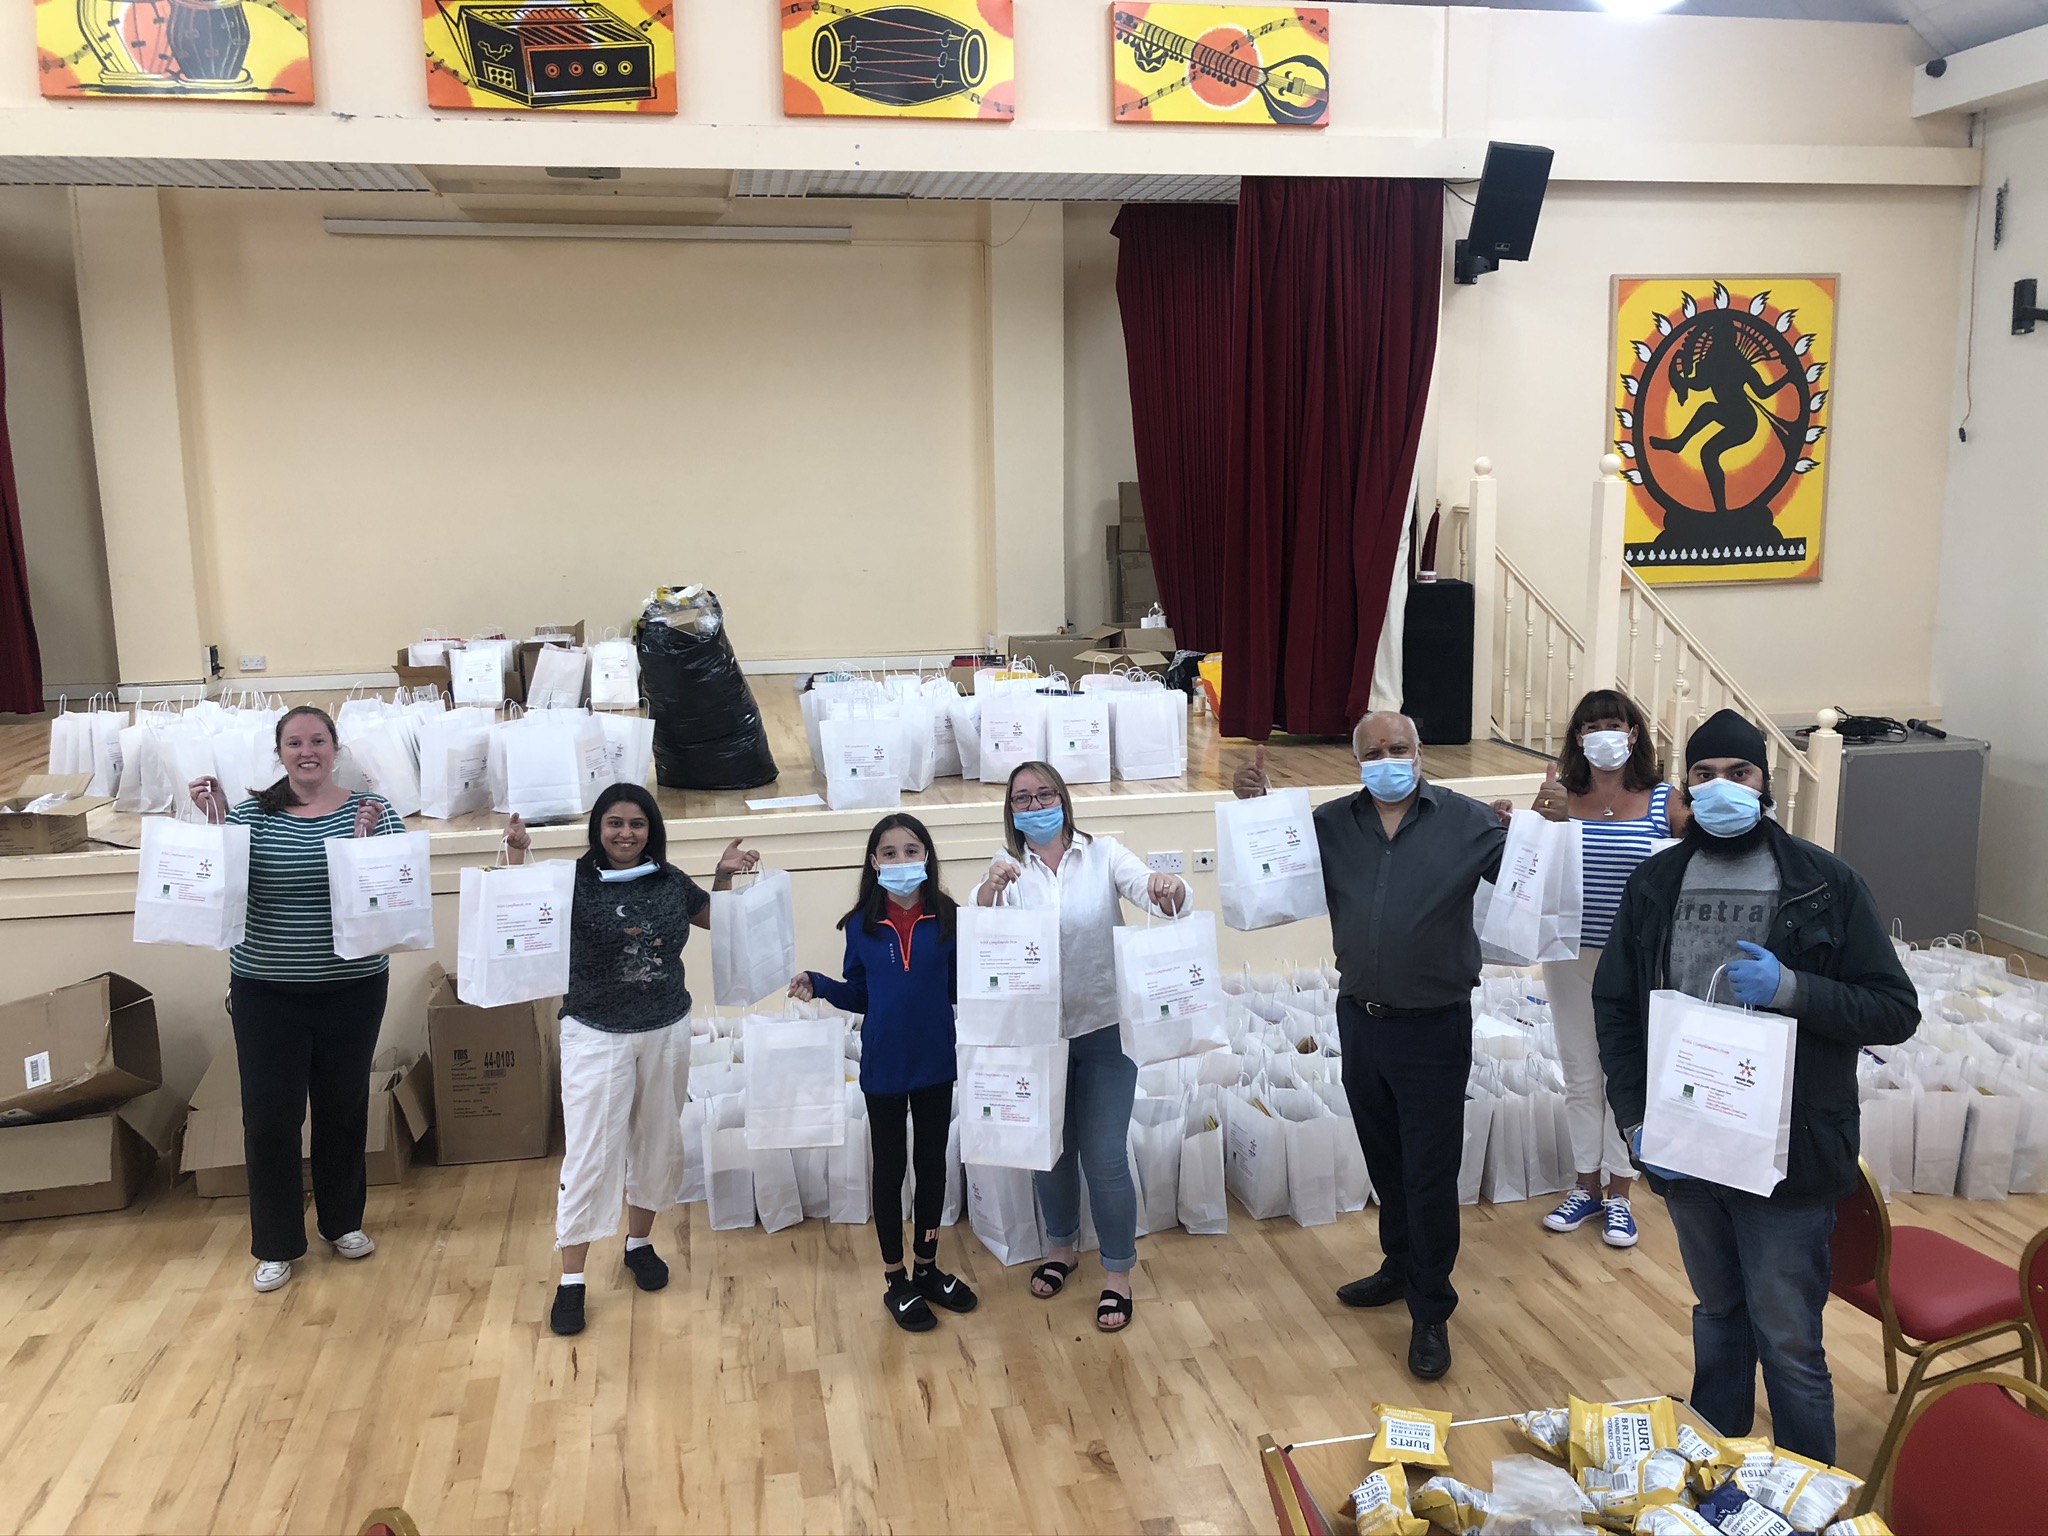 Sewa Day Nottingham volunteers with bags of prepared food